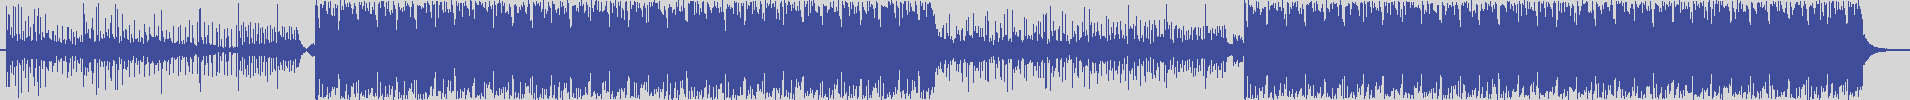 nf_boyz_records [NFY054] Ulisse Sinclard - Epopea [Club Mix] audio wave form